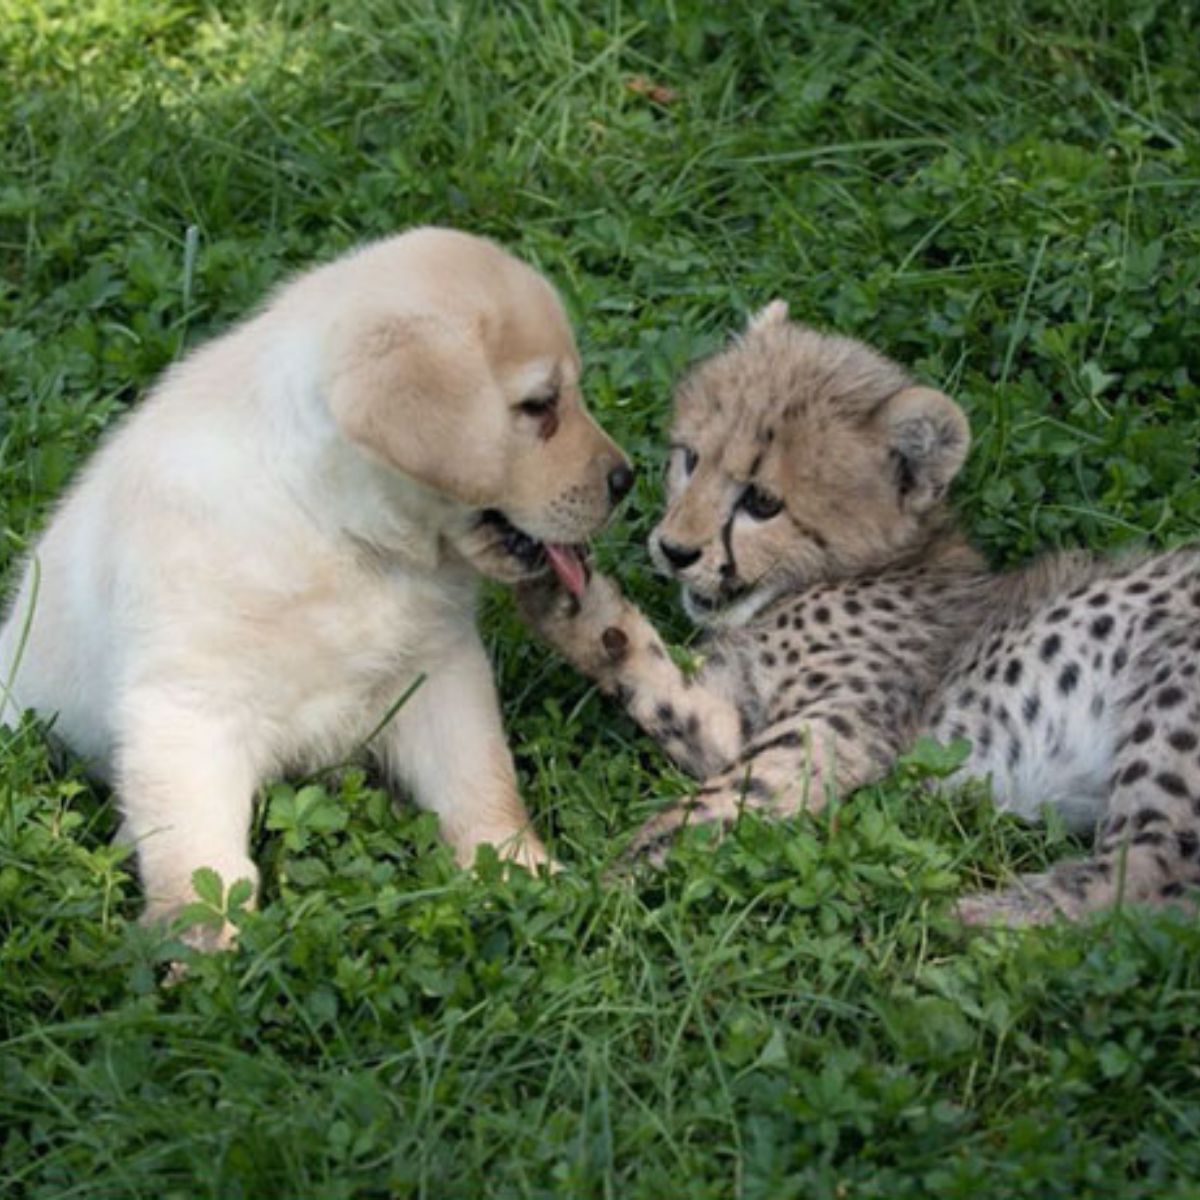 puppy and cheetah